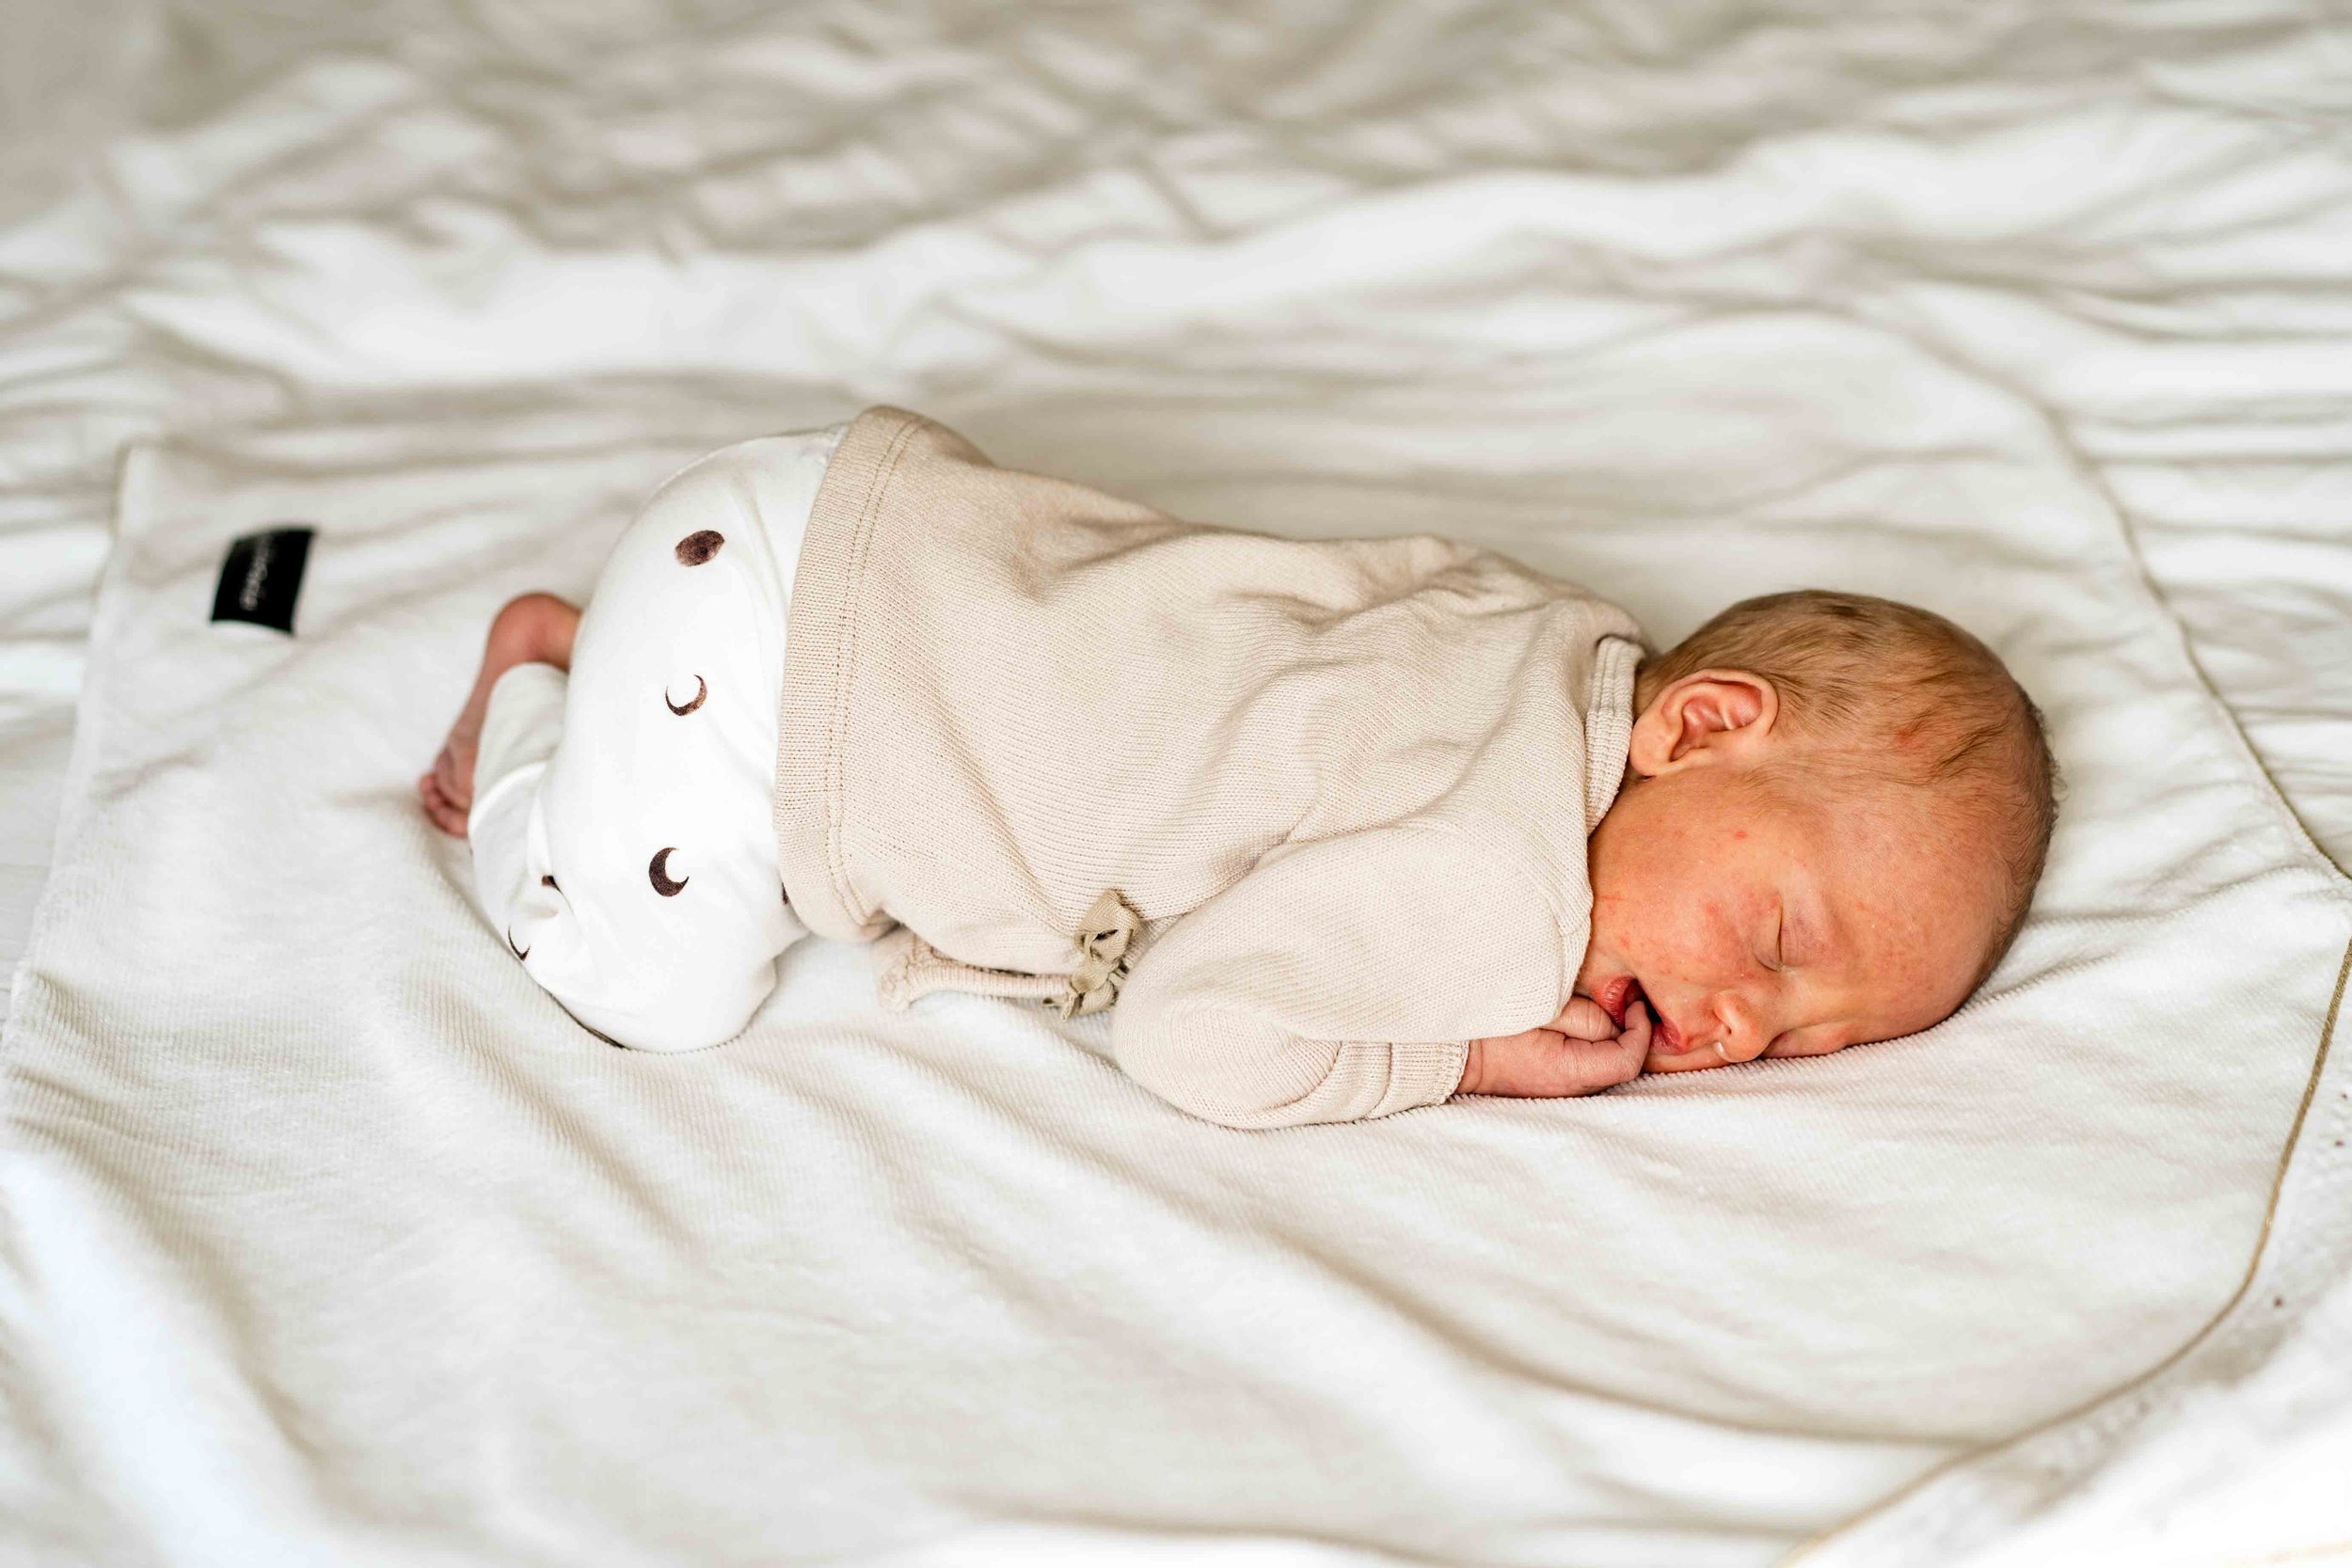 vankellyshand-familie-newborn-fotograaf-fotoshoot-4955.jpg